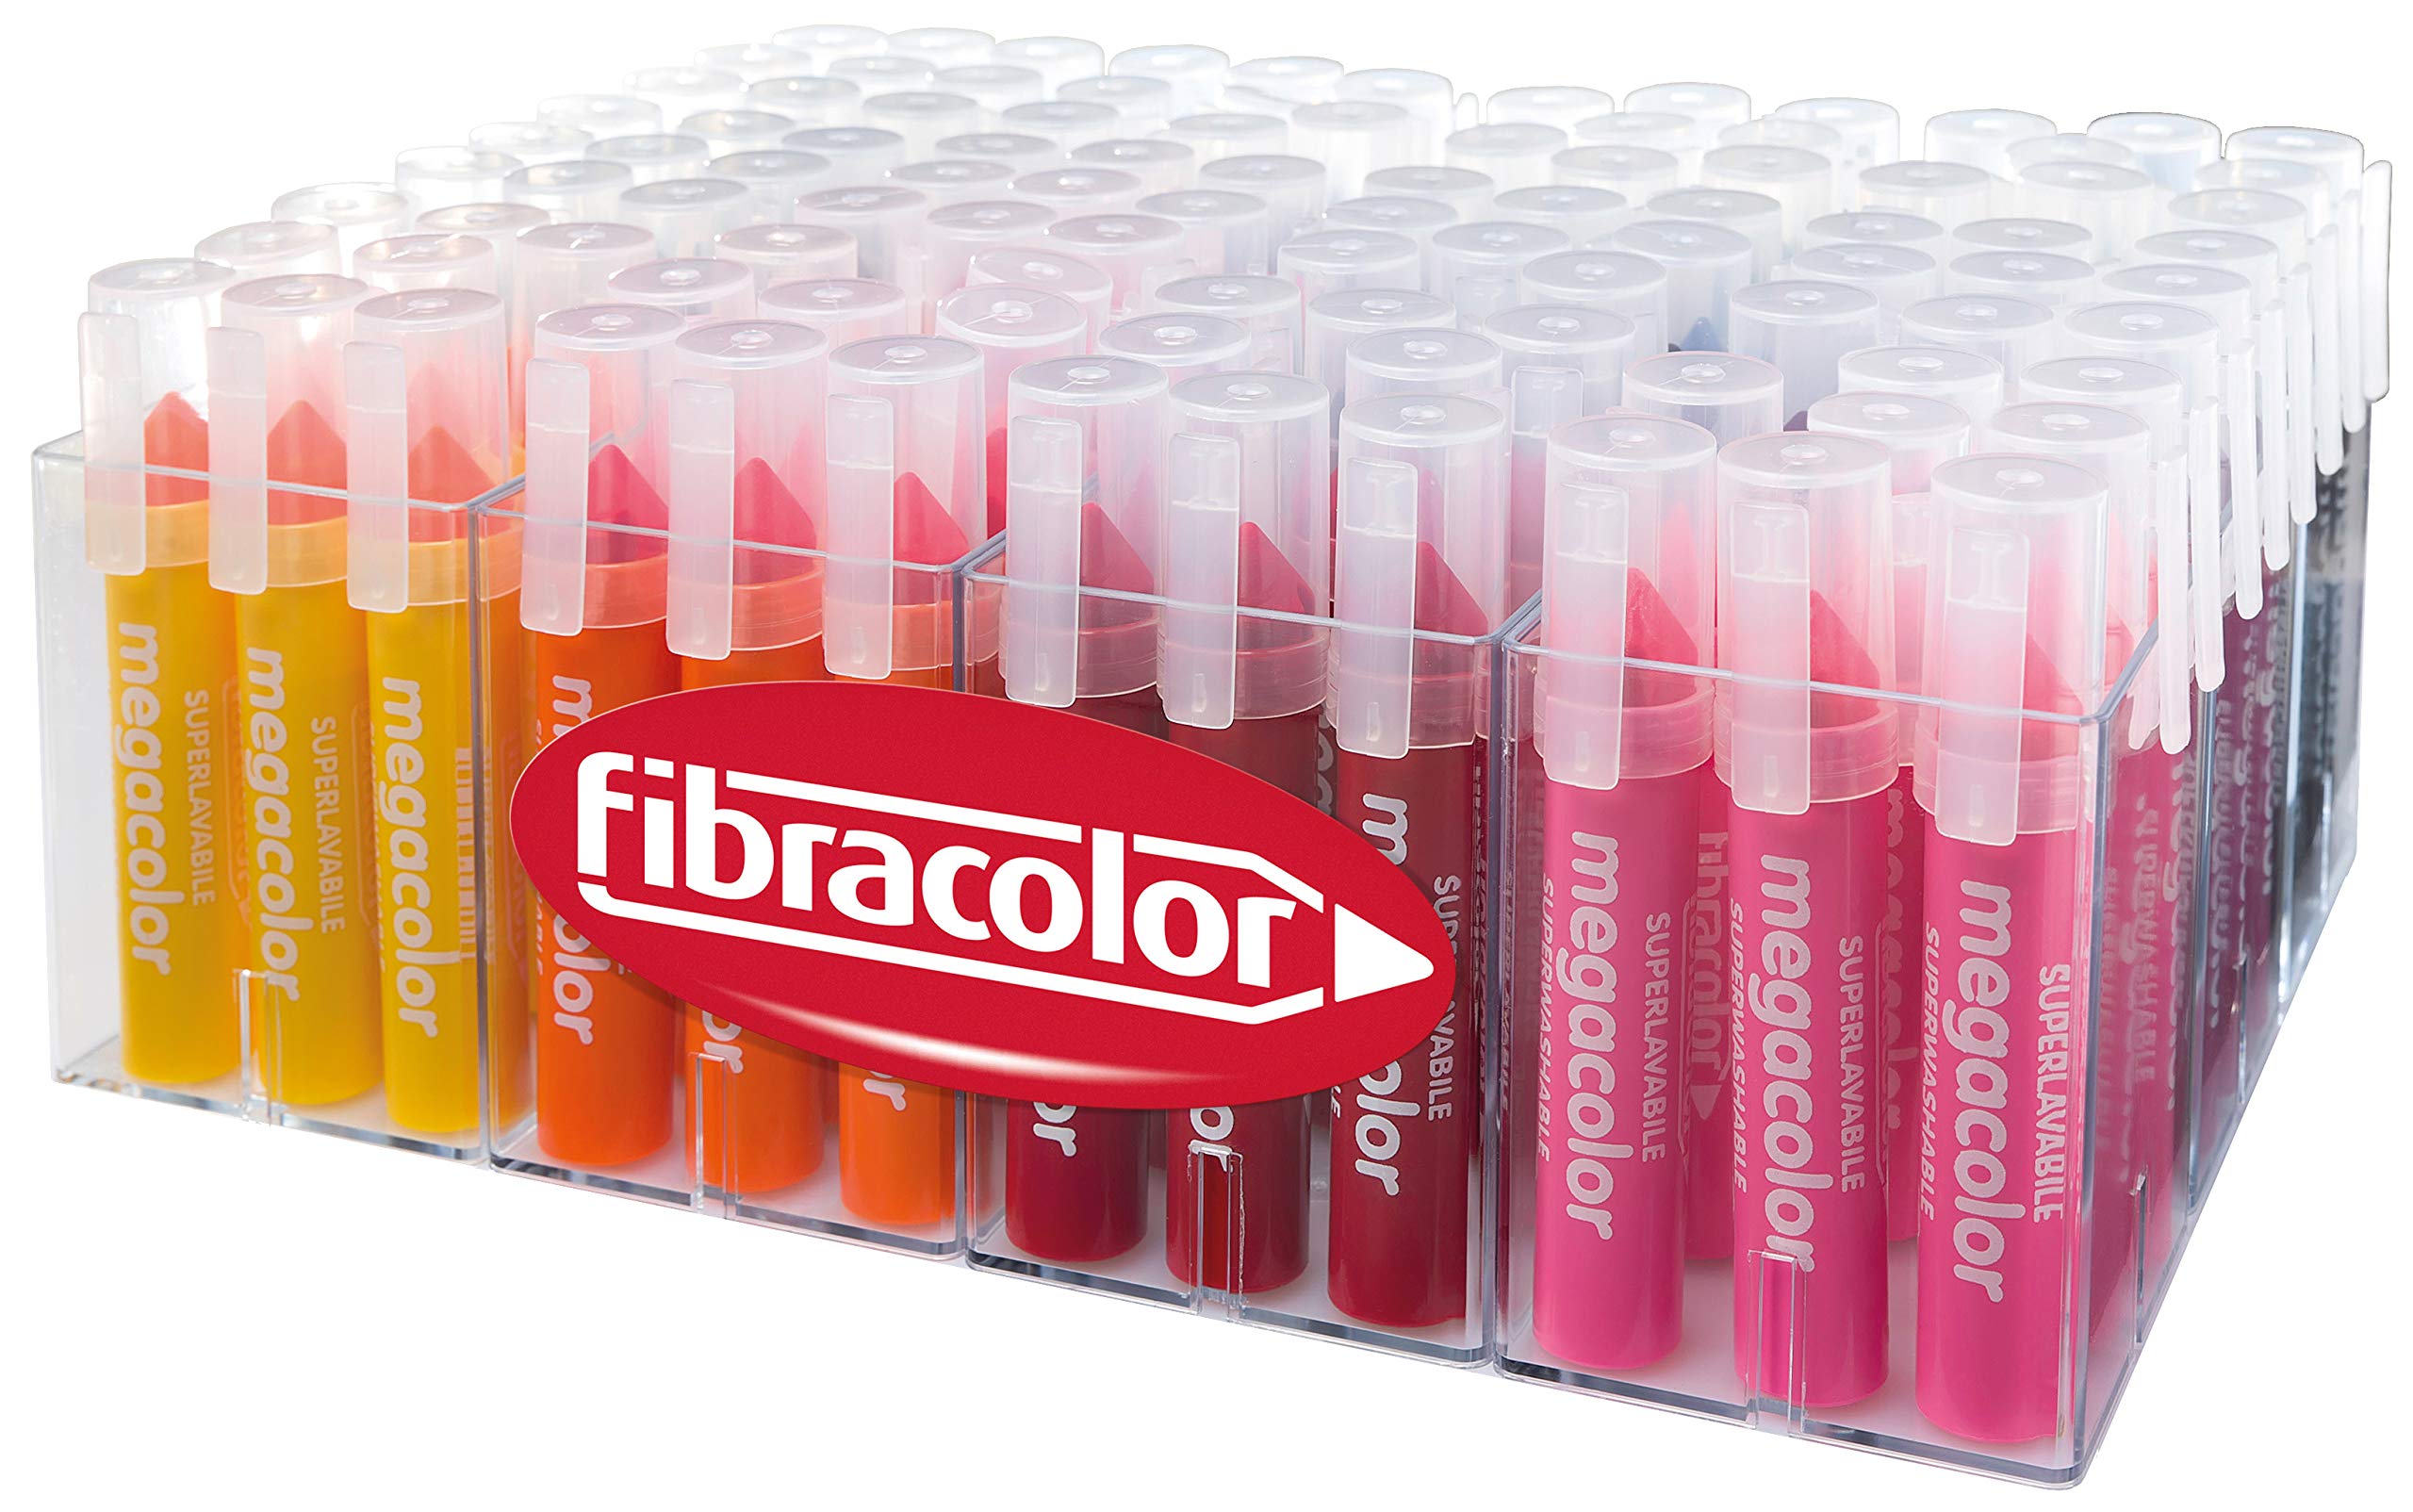 Fibracolor Megacolor Multispachtel 100 Filzstifte konisch Maxi superabwaschbar